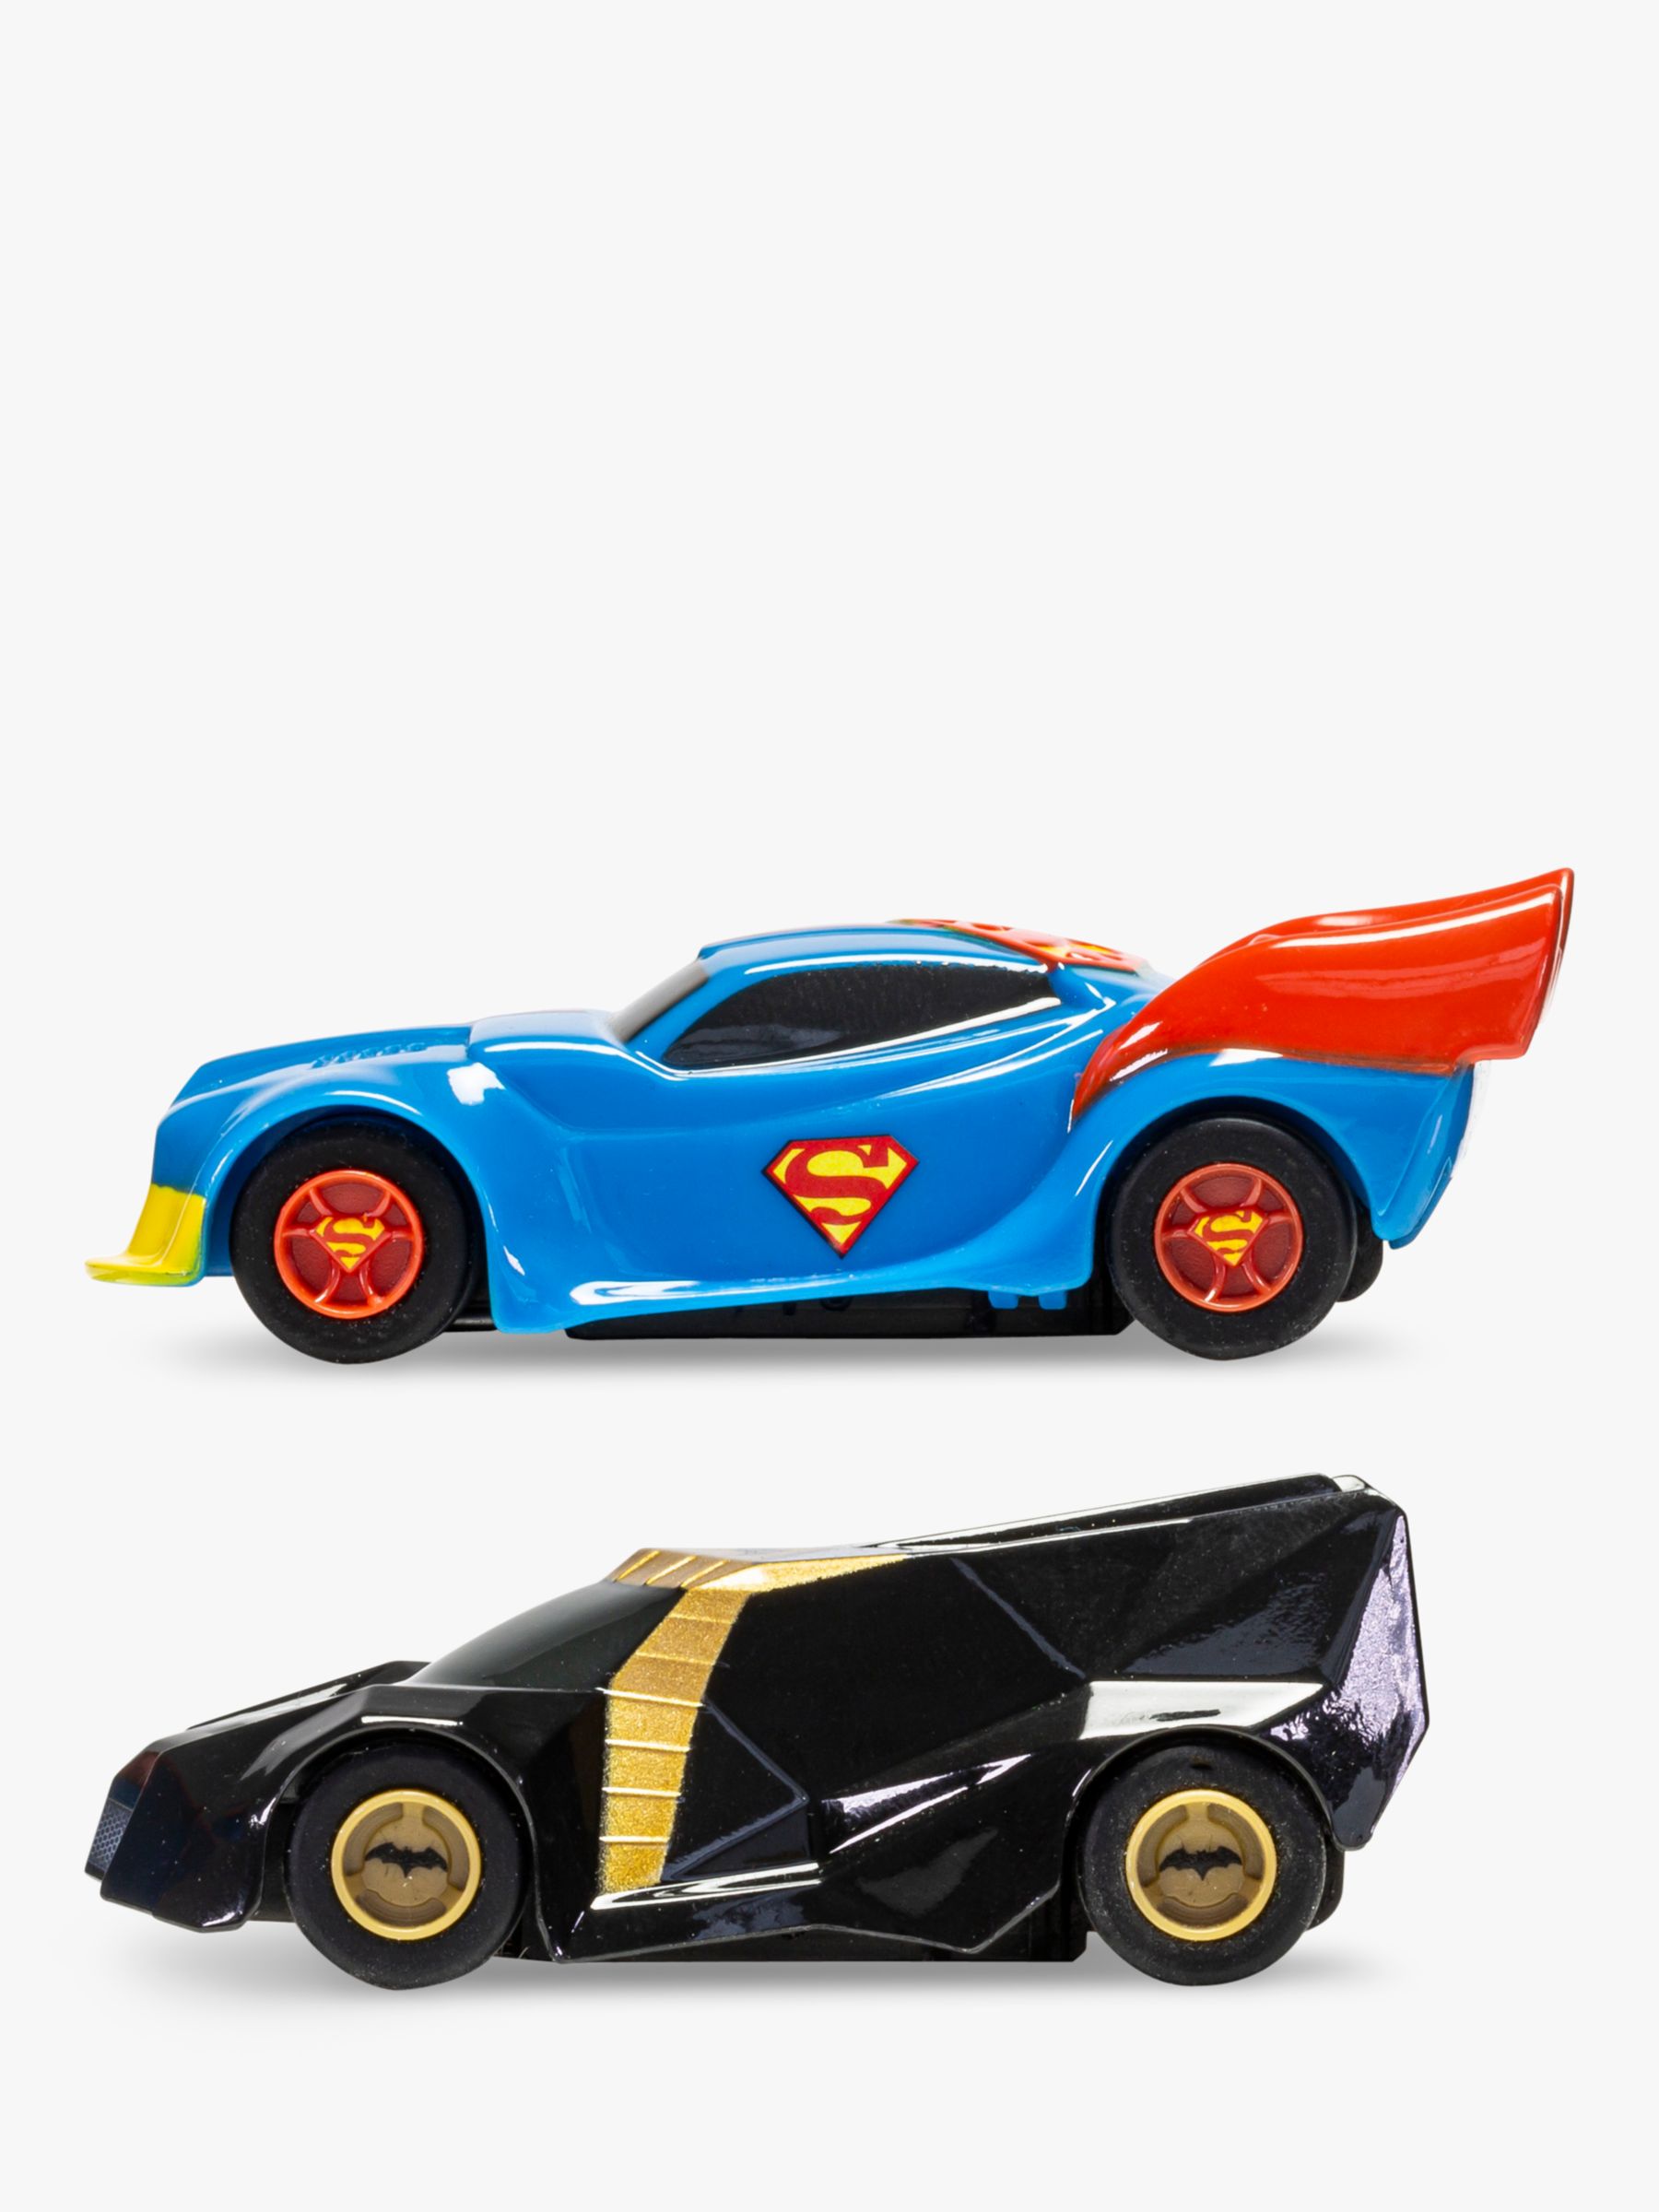 Scalextric G1151 Justice League Batman vs Superman Batt Powerd 1/64 Slot Car Set 